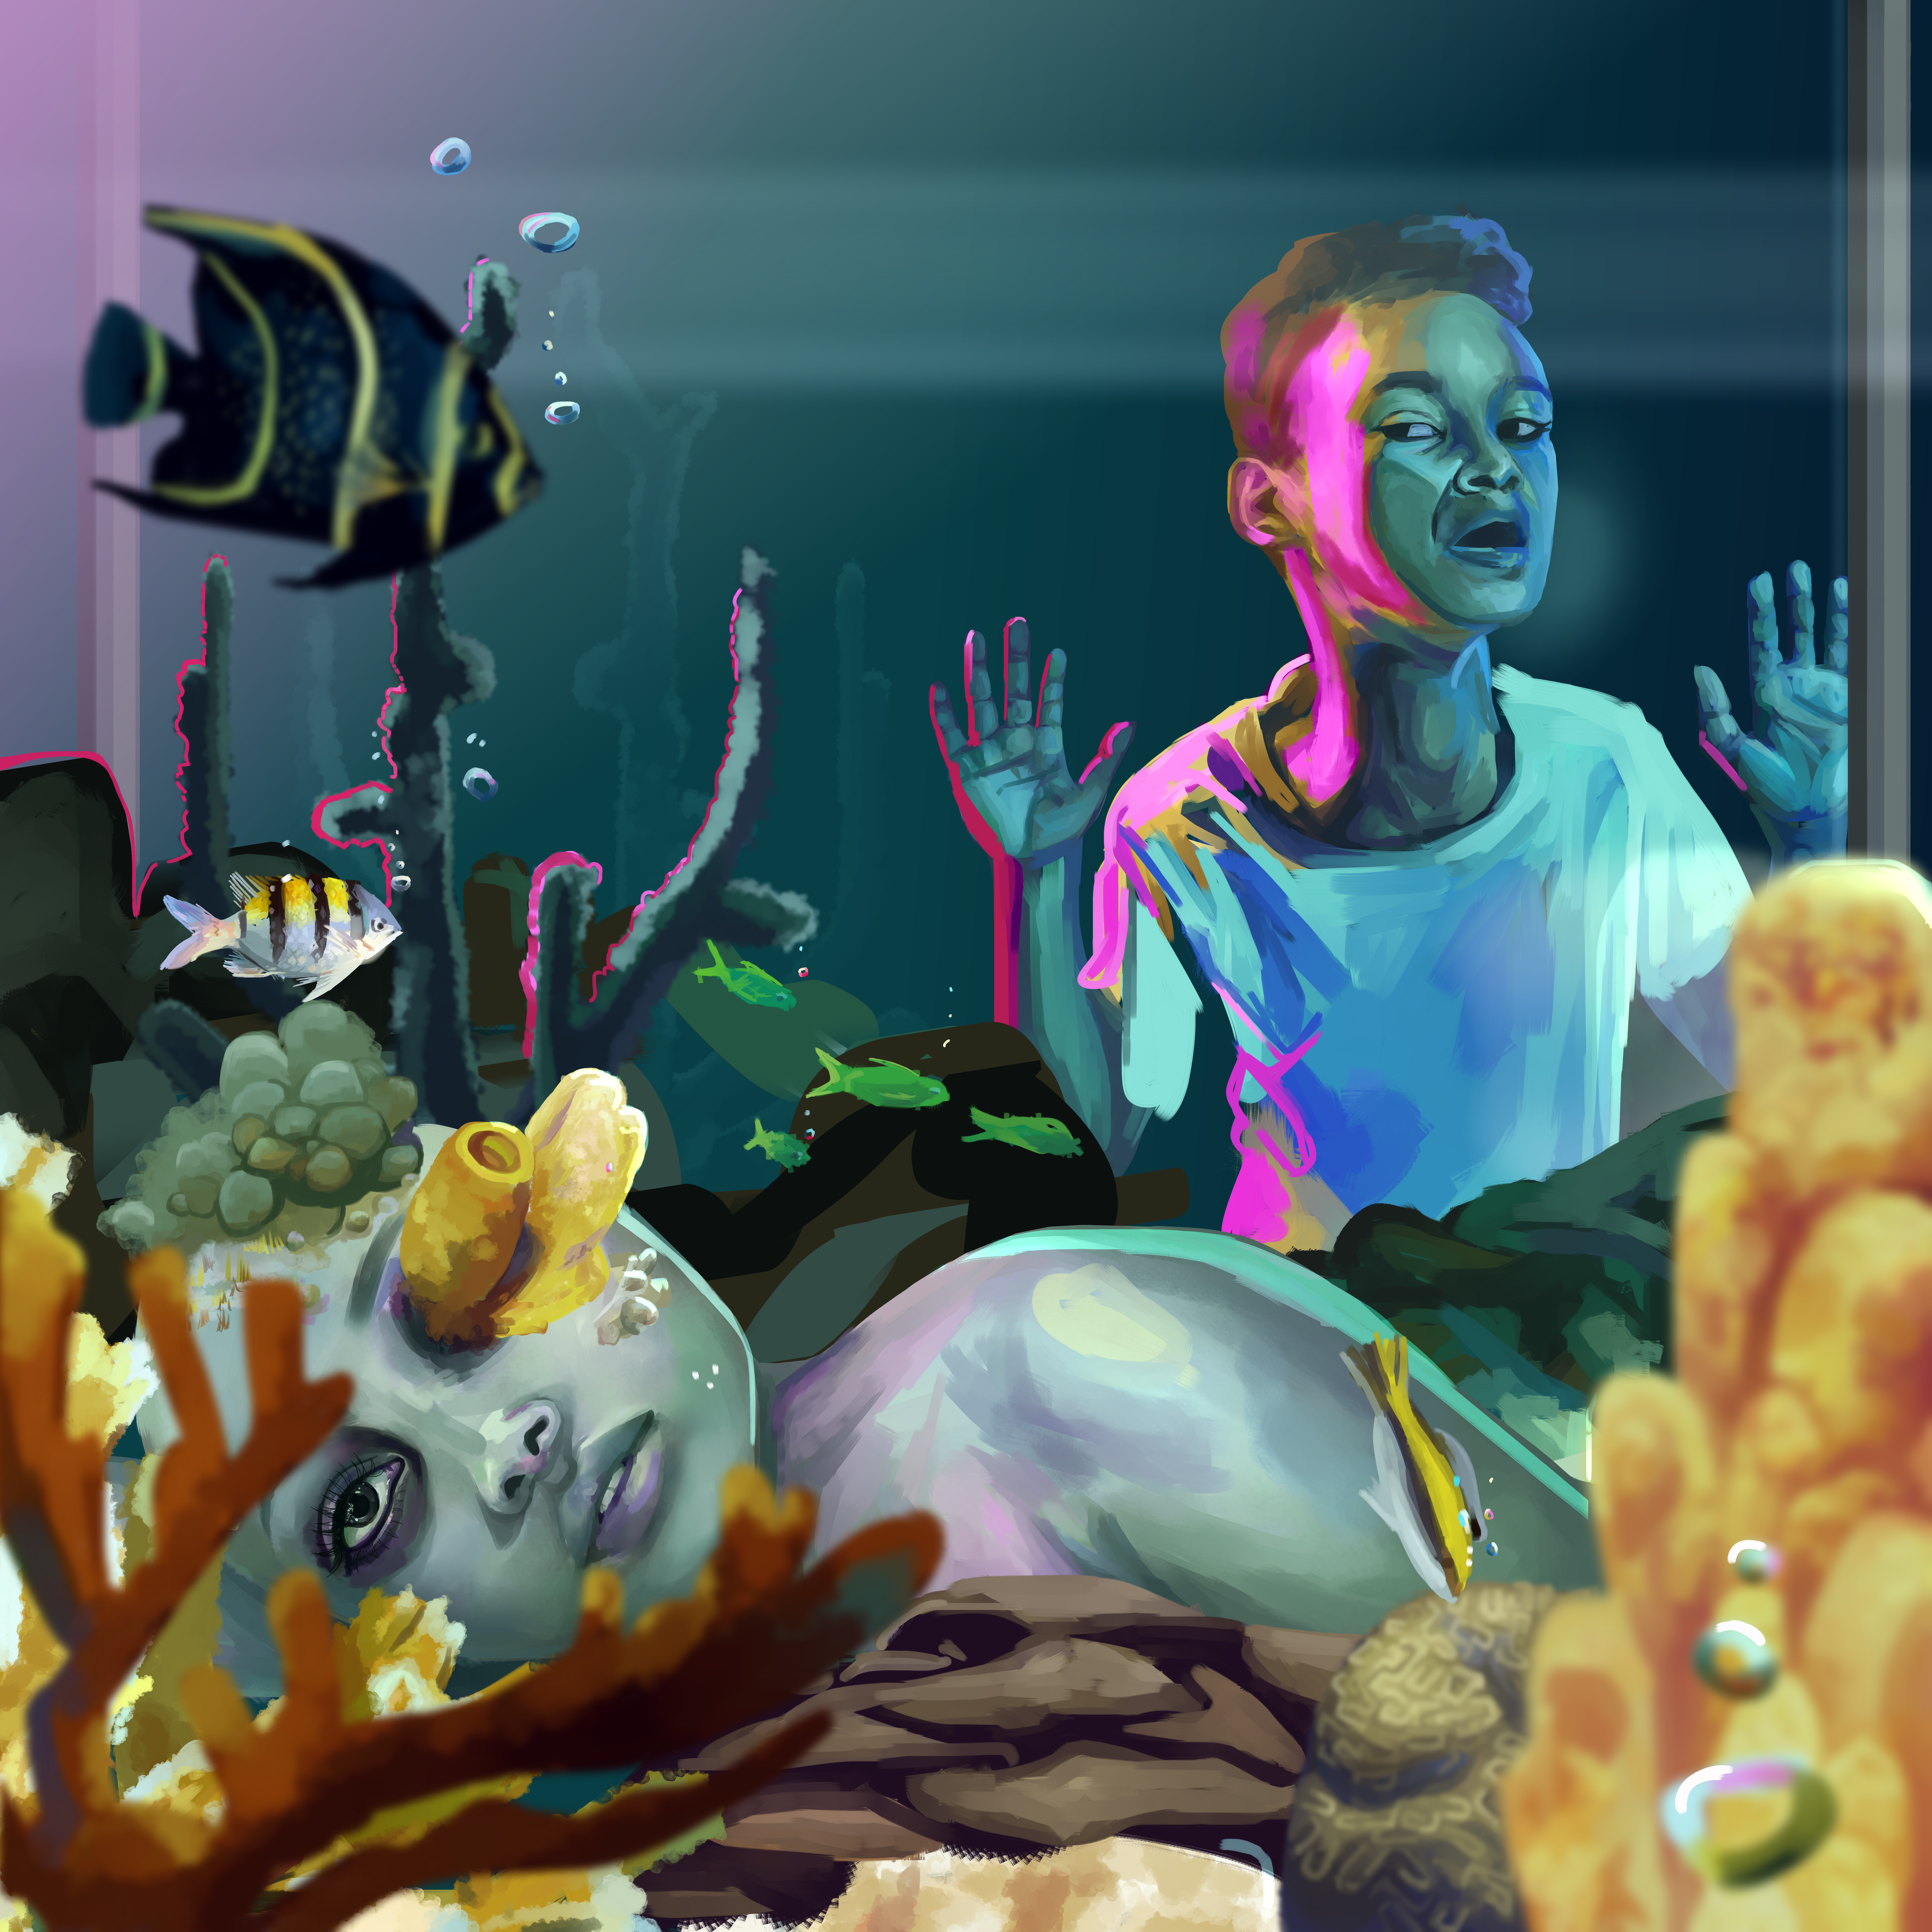 Digital art of an underwater scene.